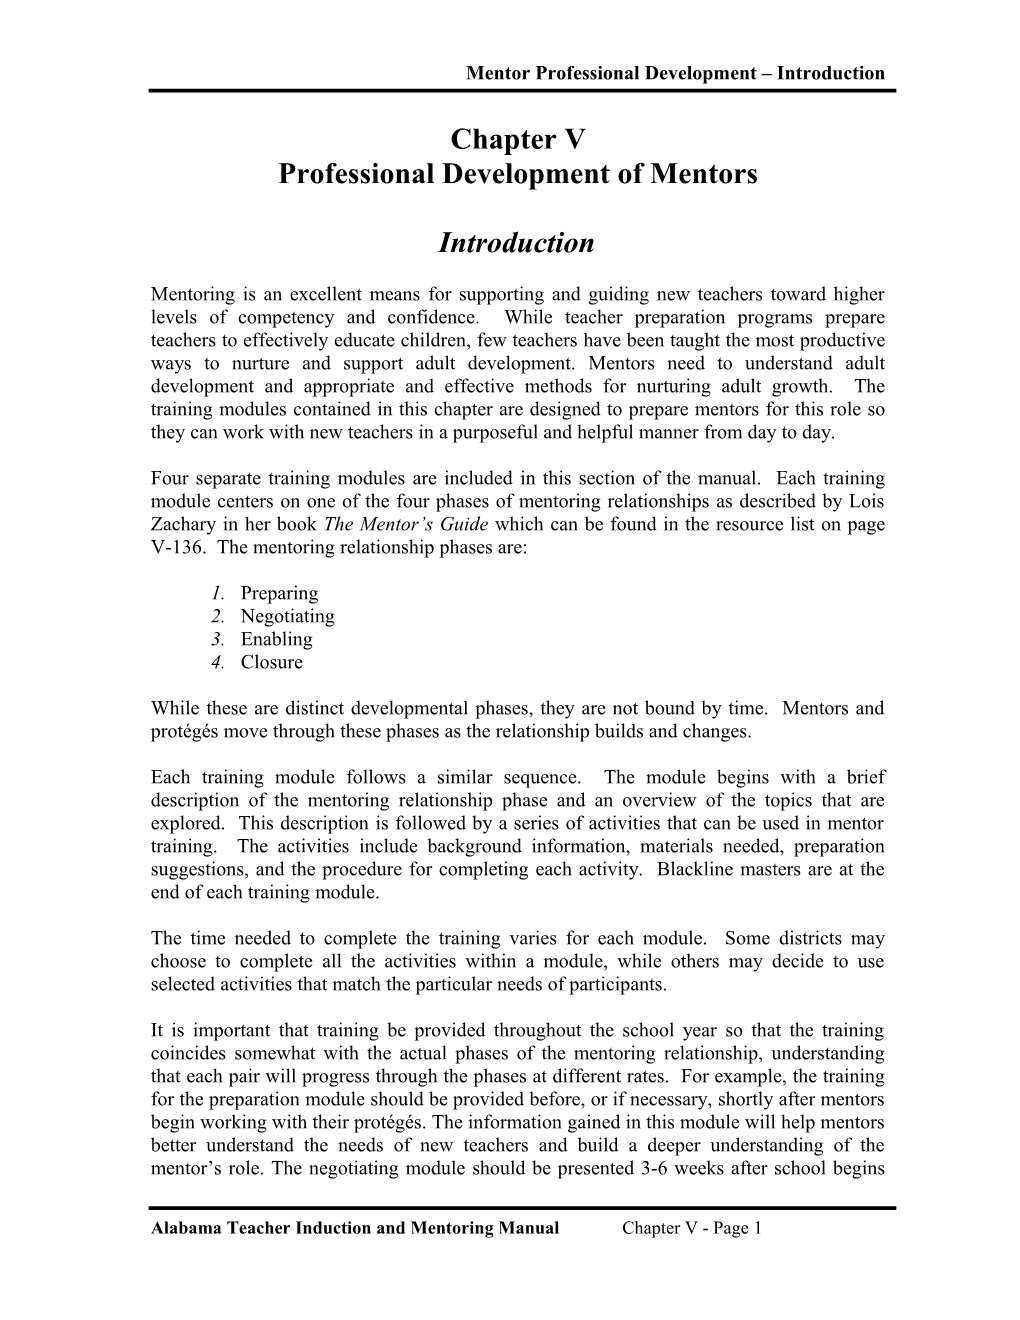 Professional Development of Mentors